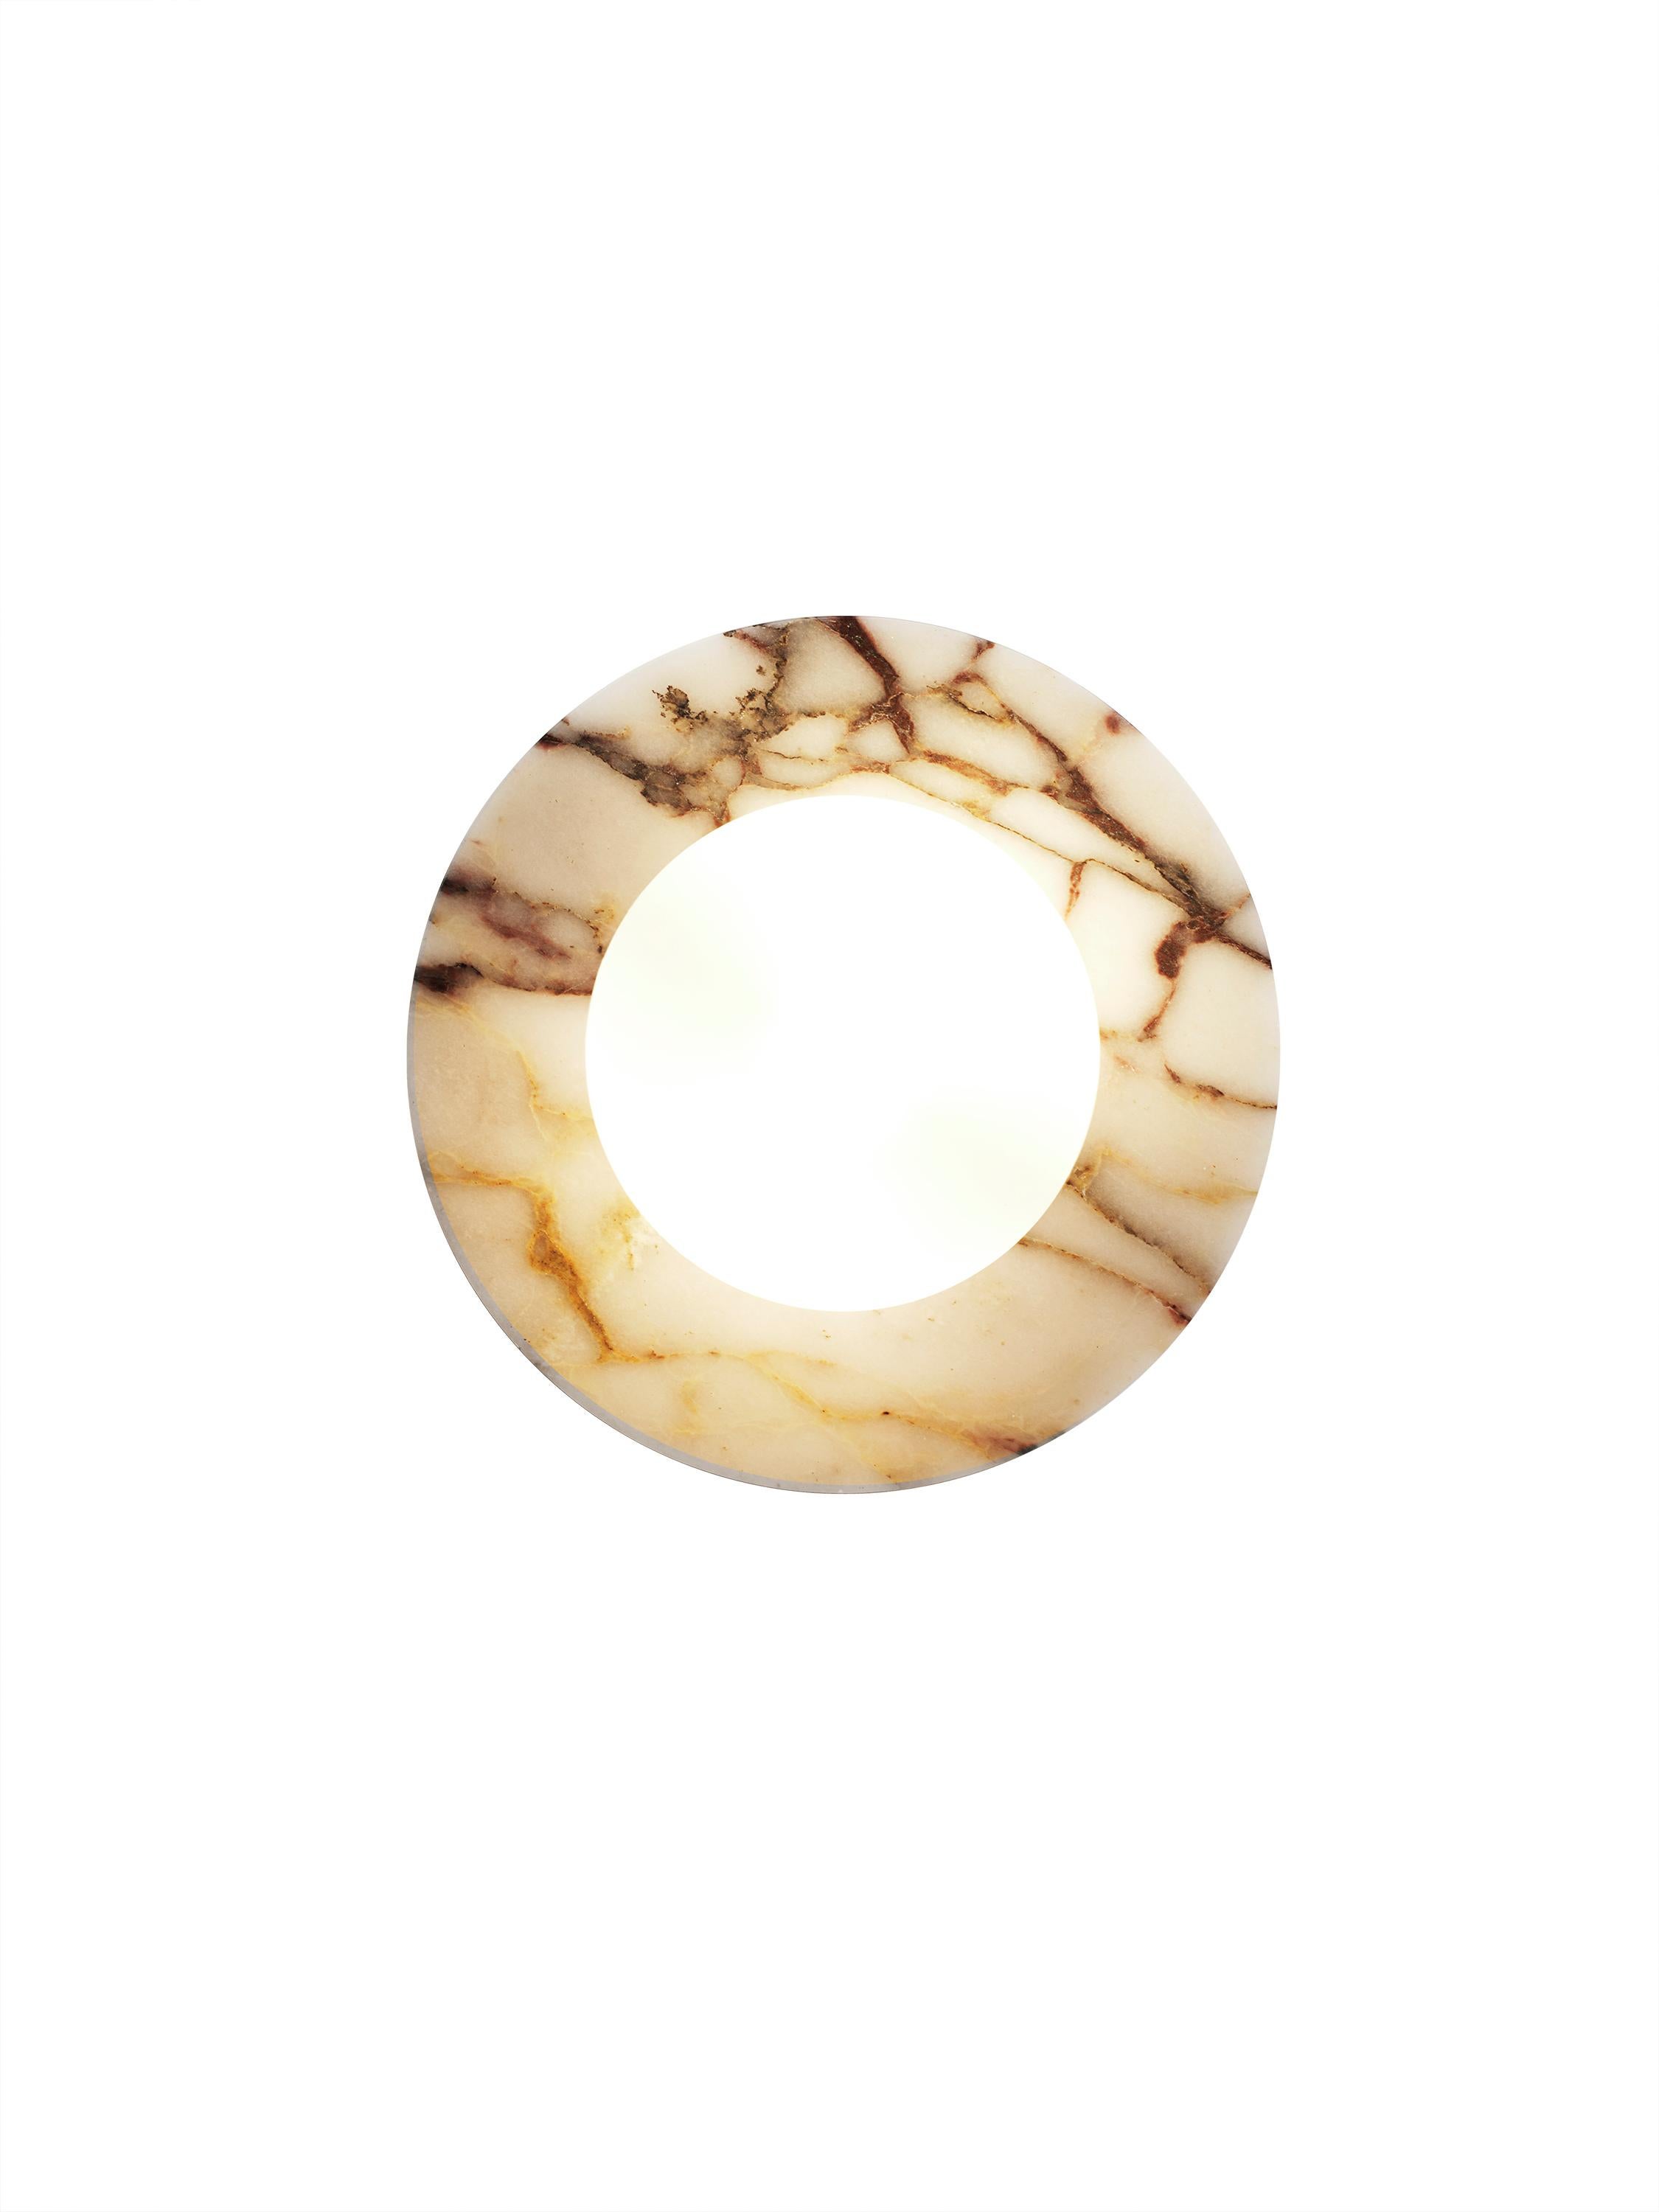 Modern LUCIE Calacatta Marble Flushmount/Sconce Emily Del Bello x Blueprint Lighting  For Sale